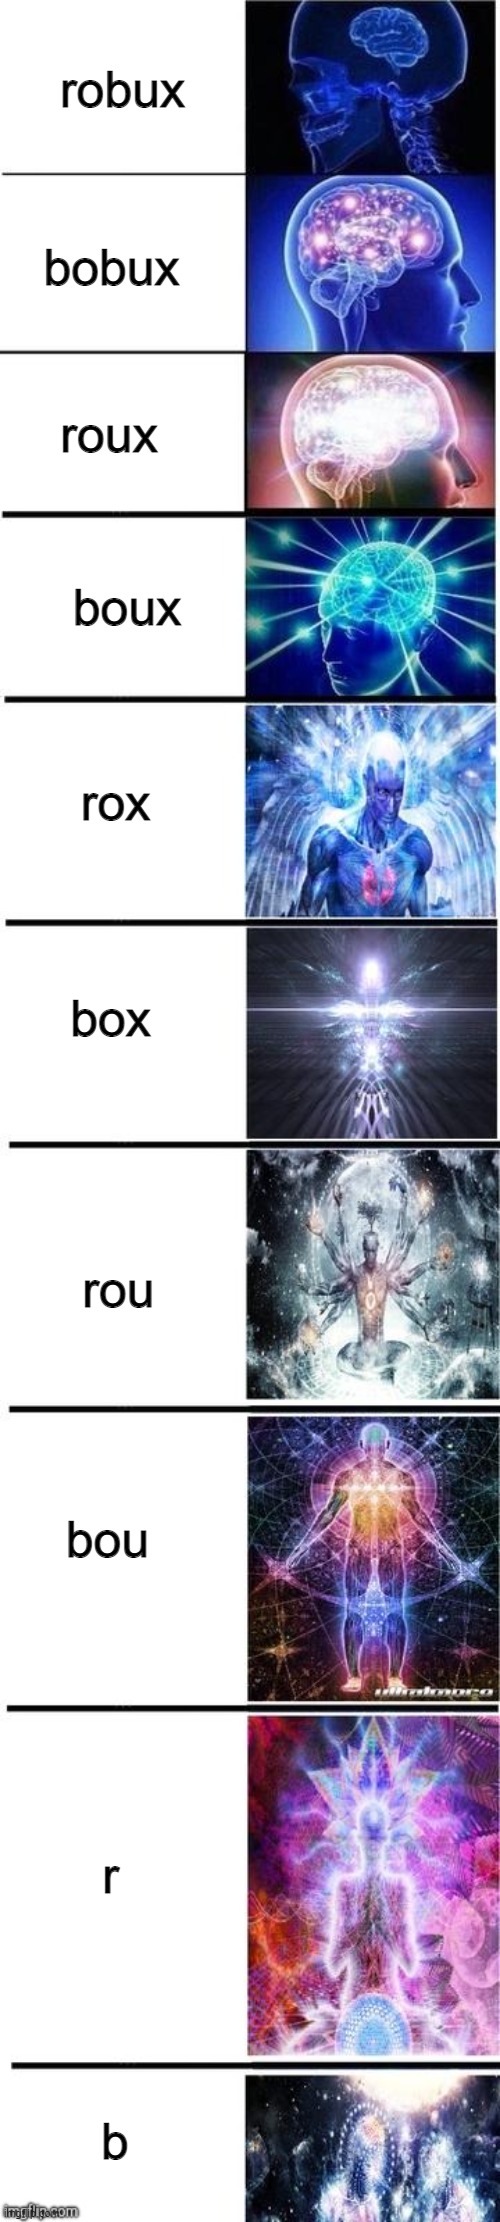 Expanding brain 10 panel | robux; bobux; roux; boux; rox; box; rou; bou; r; b | image tagged in expanding brain 10 panel | made w/ Imgflip meme maker